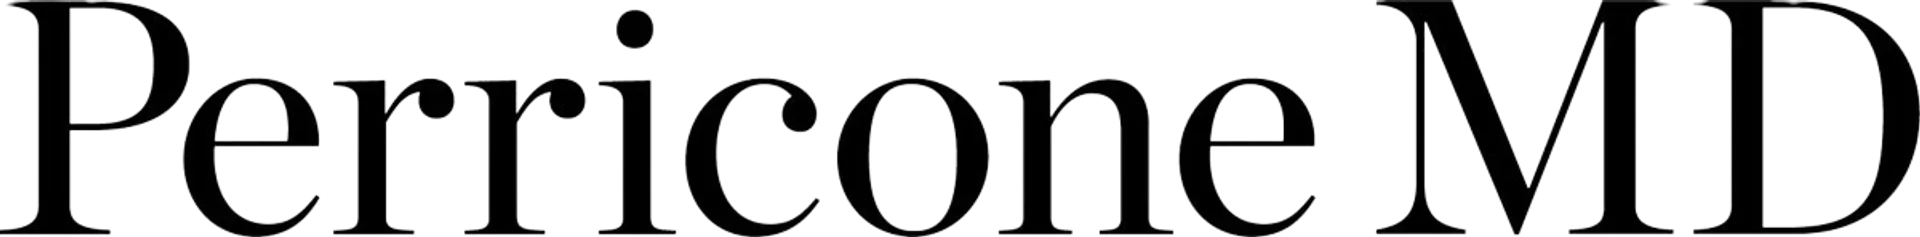 PERRICONE MD logo